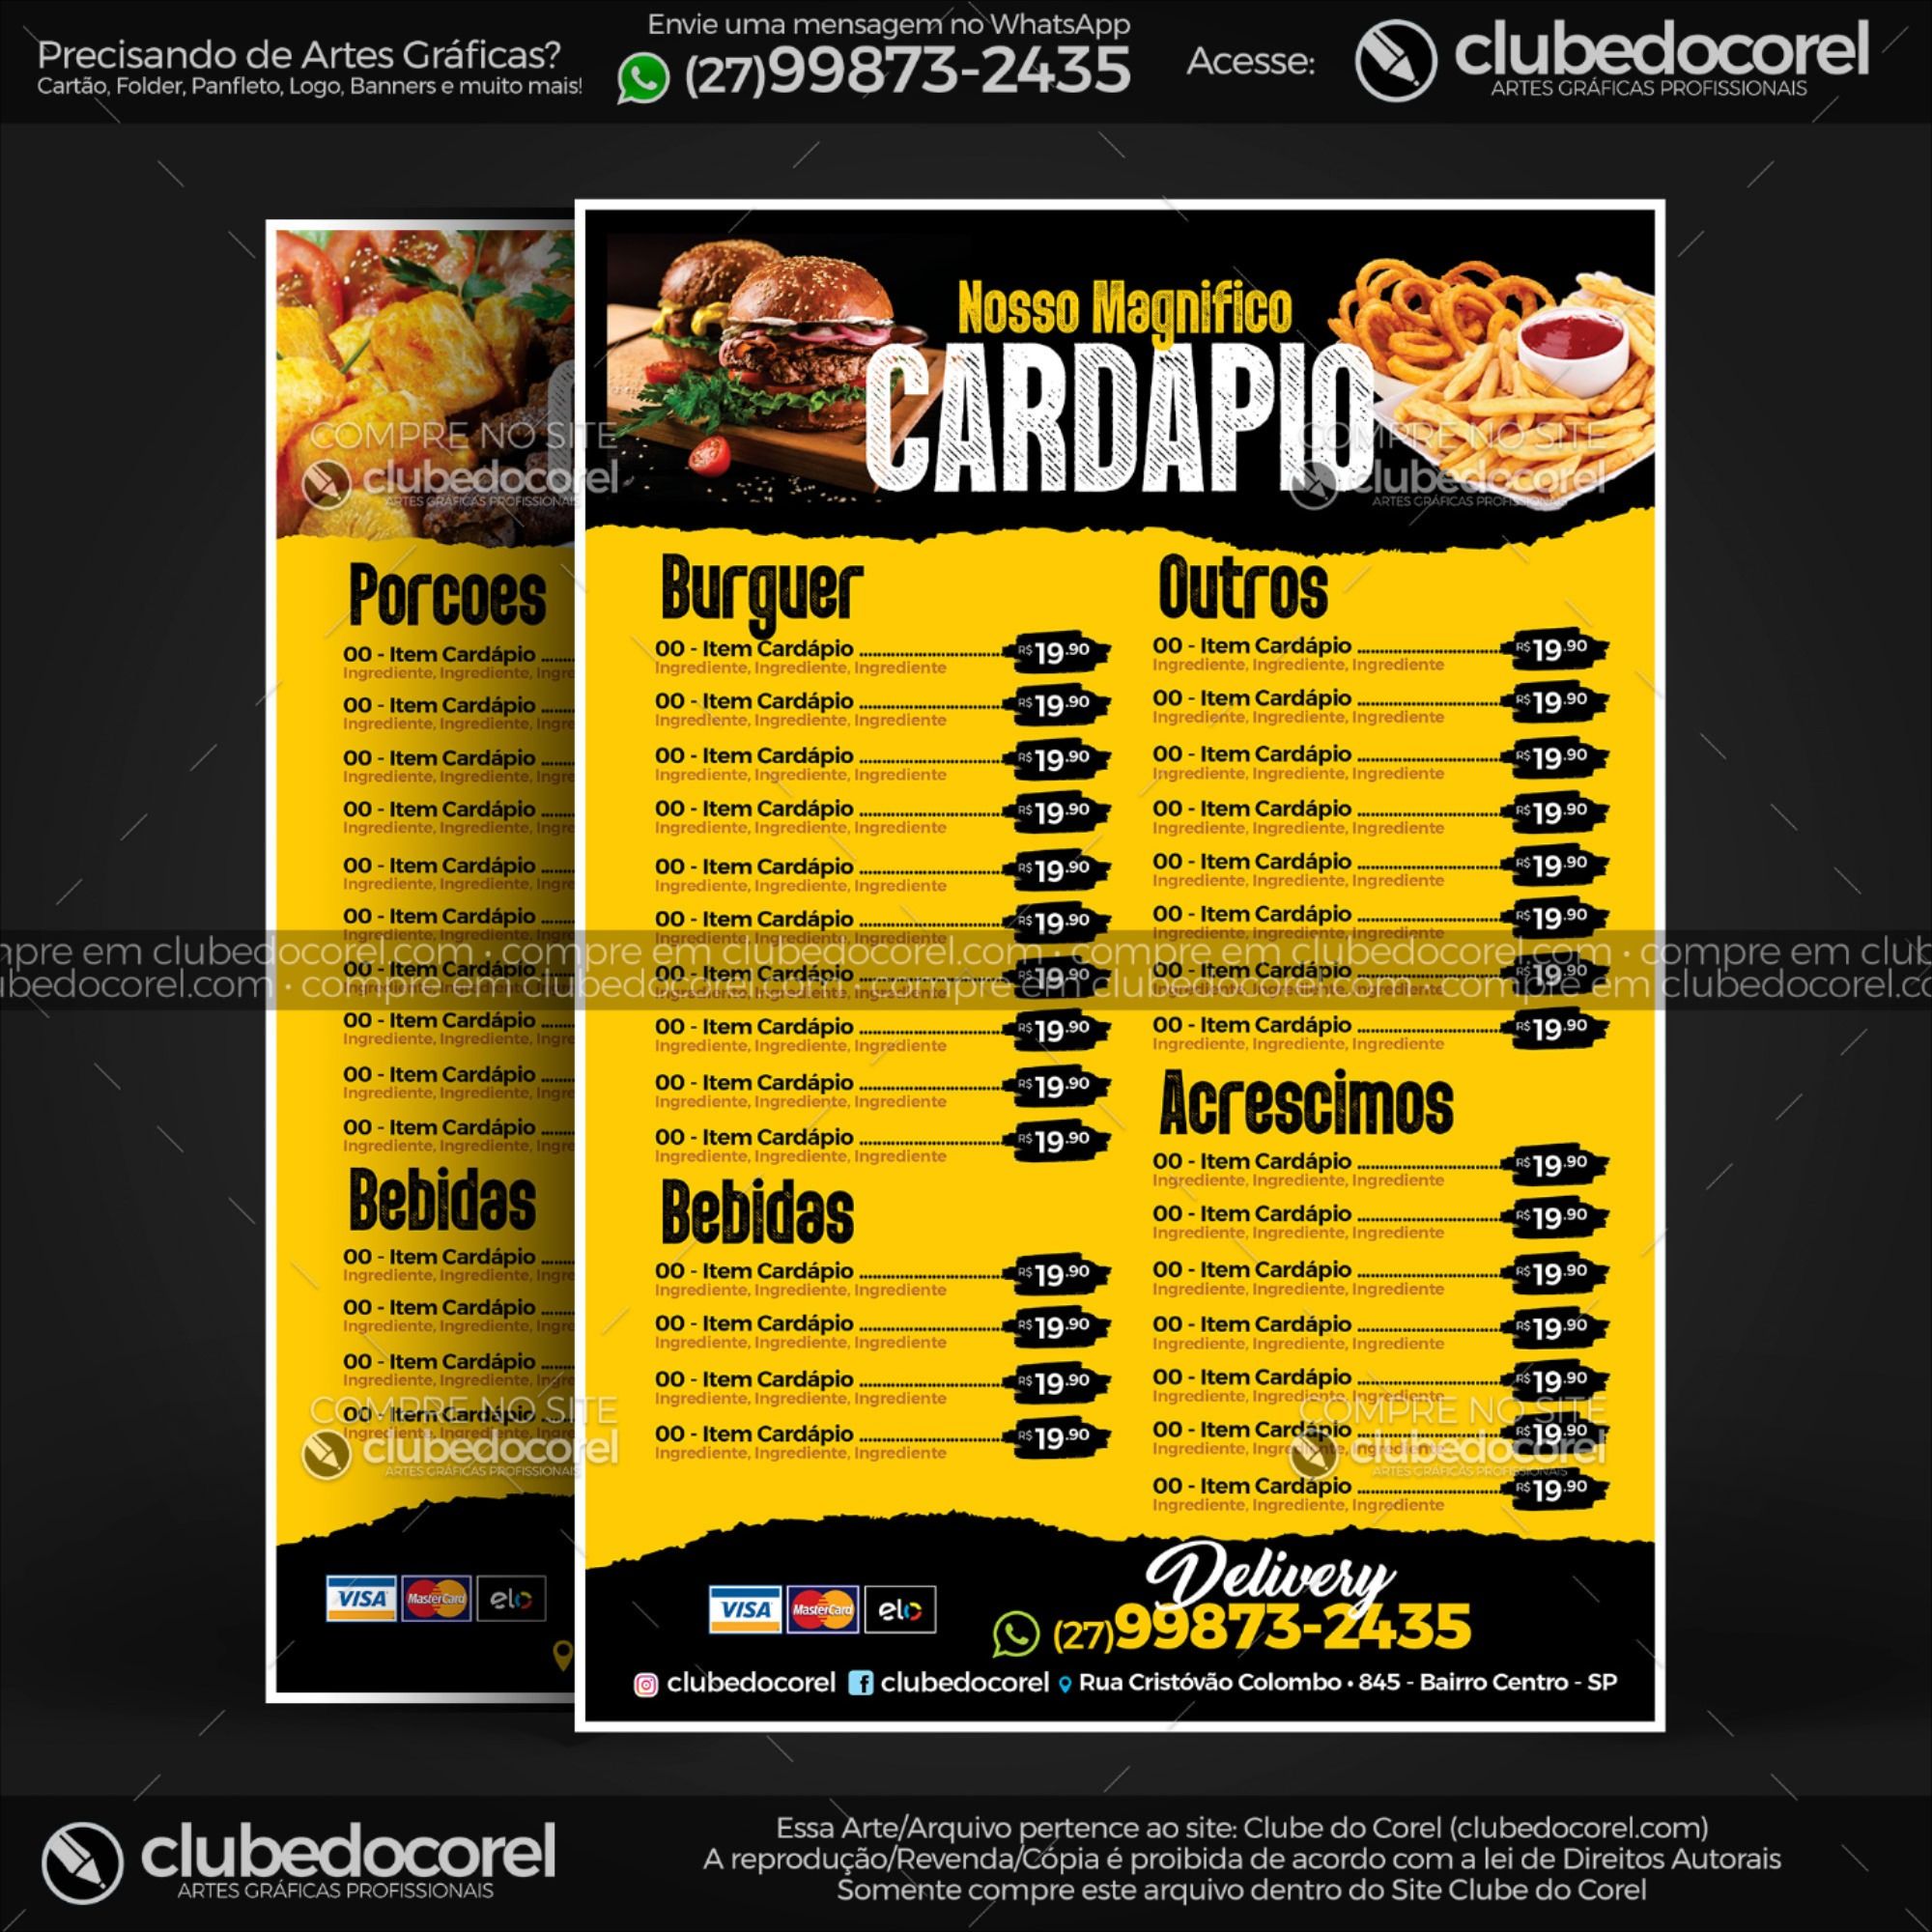 Cardápio Lanchonete #04 - Hamburguer Gourmet (CDR e PDF) | Clube do Corel |  Cardápio lanchonete, Cardapio de lanches, Hambúrguer gourmet - cardápio